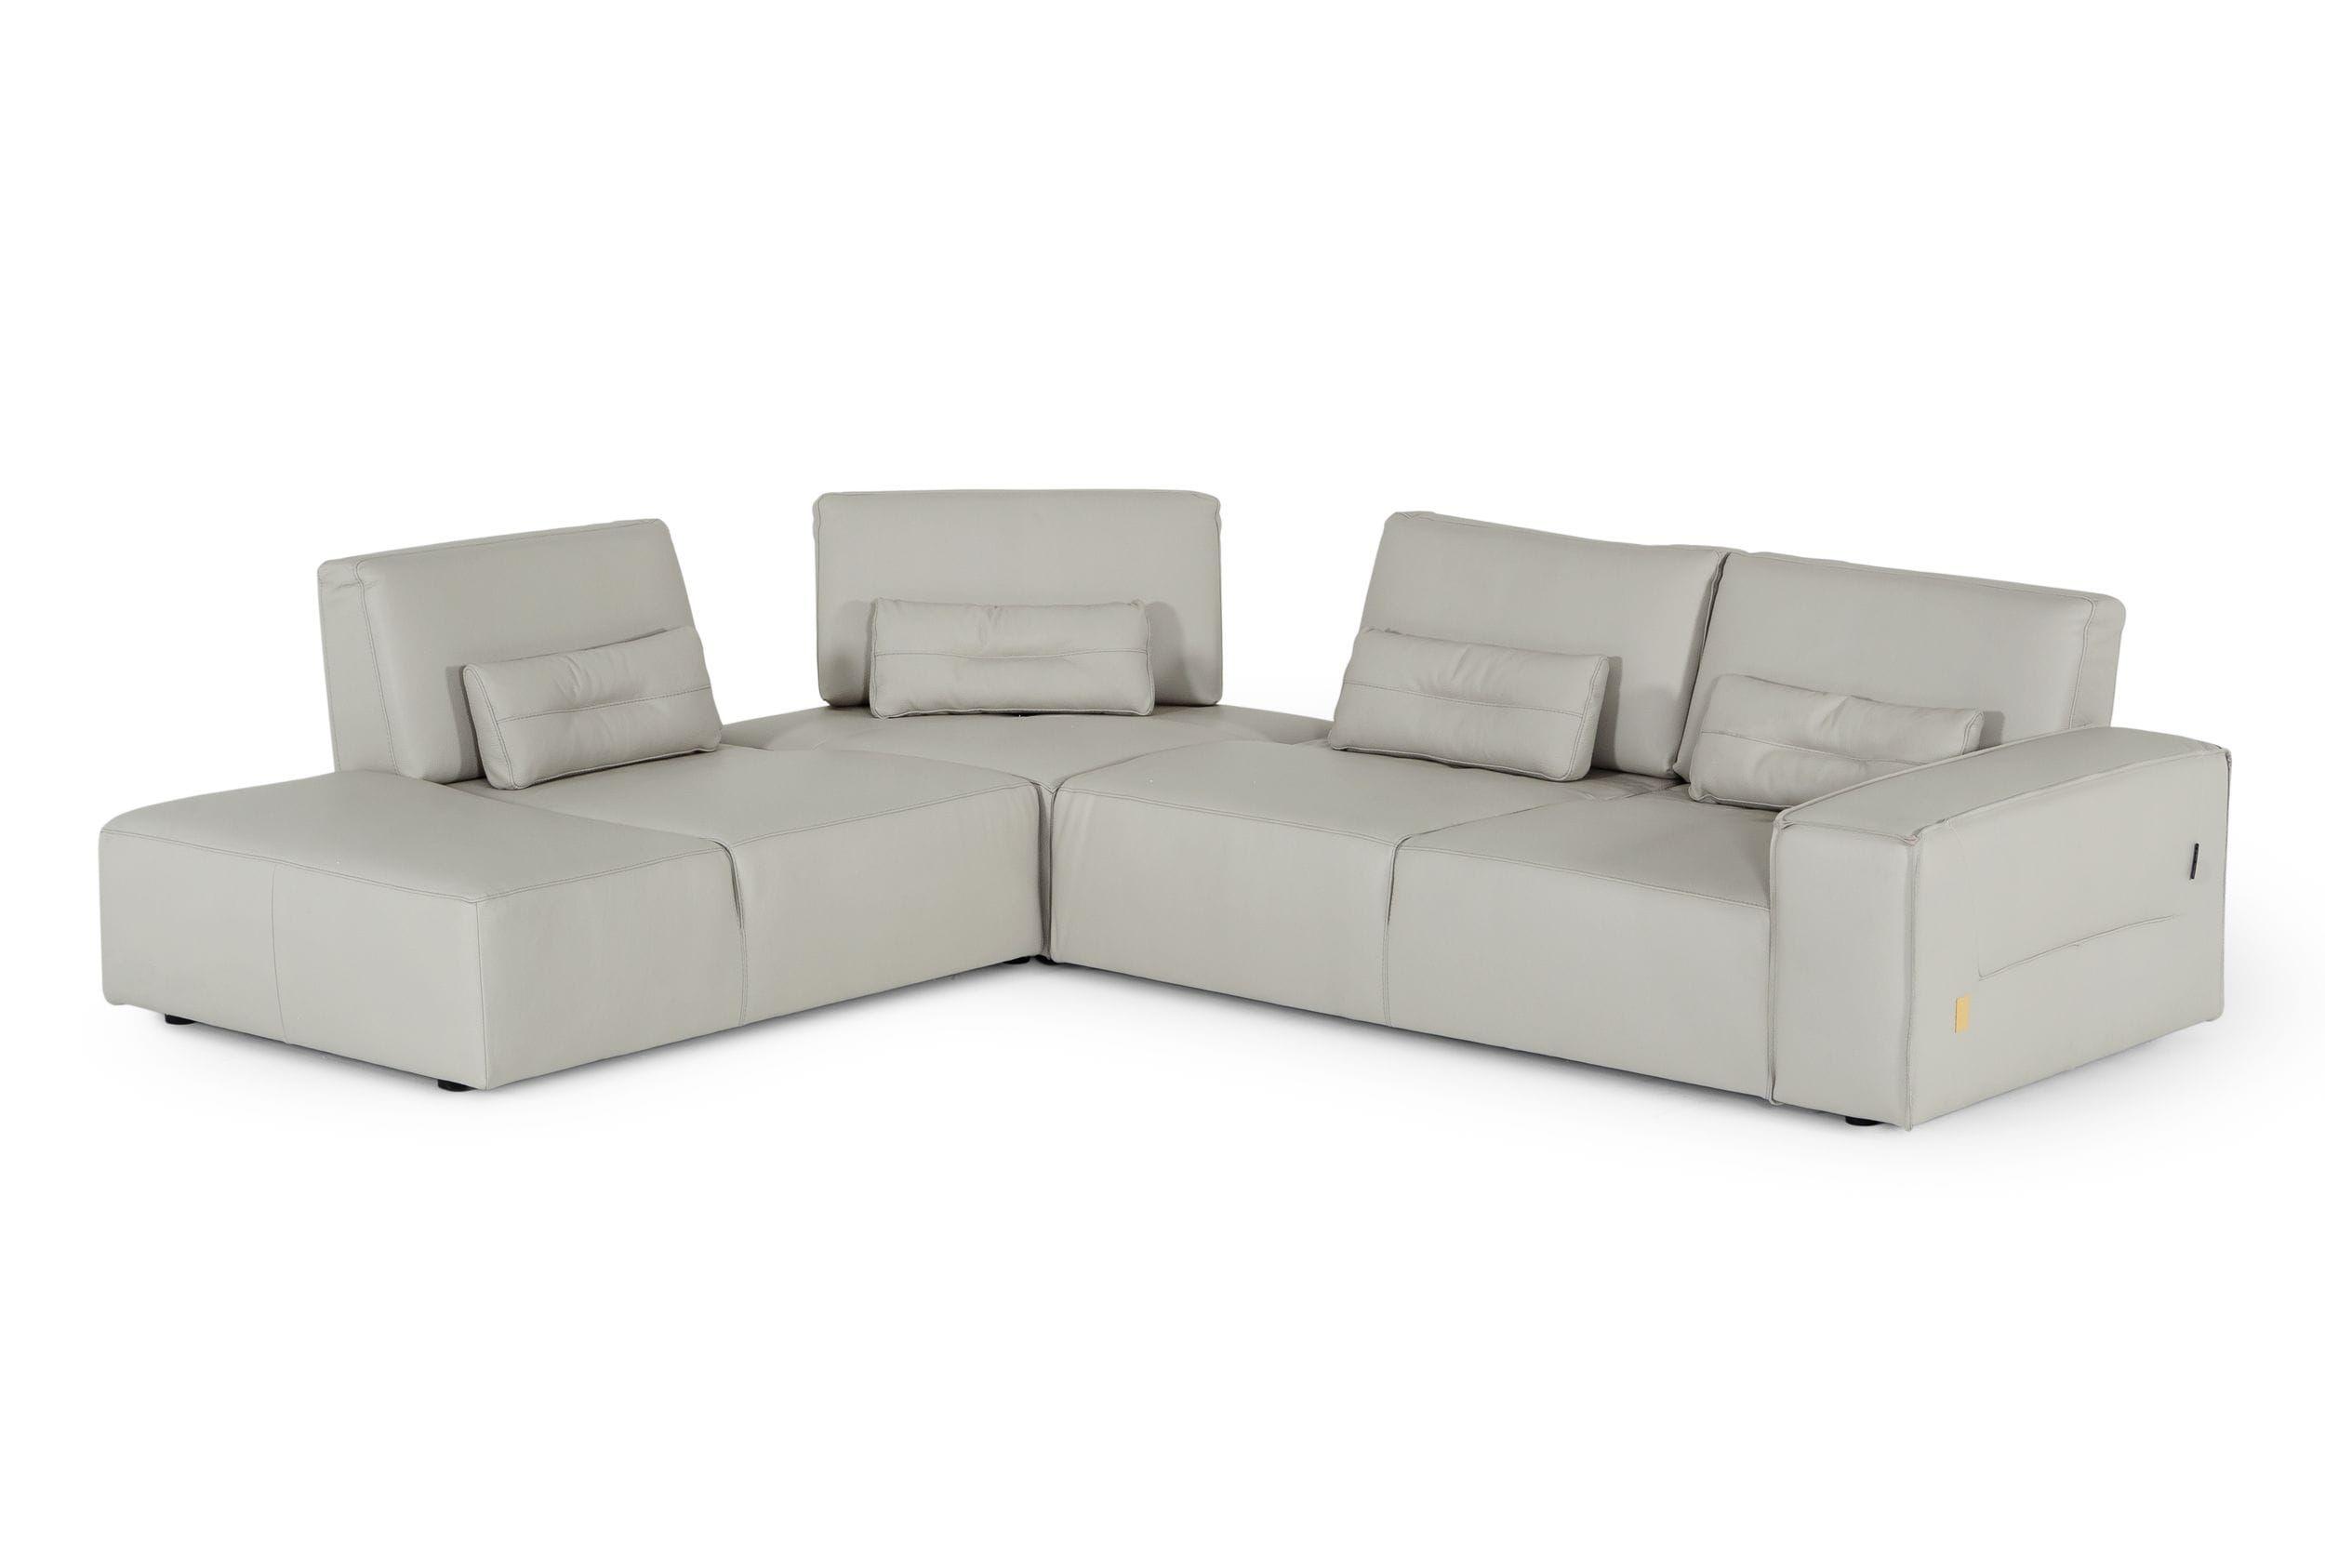 Contemporary, Modern Sectional Sofa VGDDENJOY-GRYWHT-SECT VGDDENJOY-GRYWHT-SECT in Gray Genuine Leather